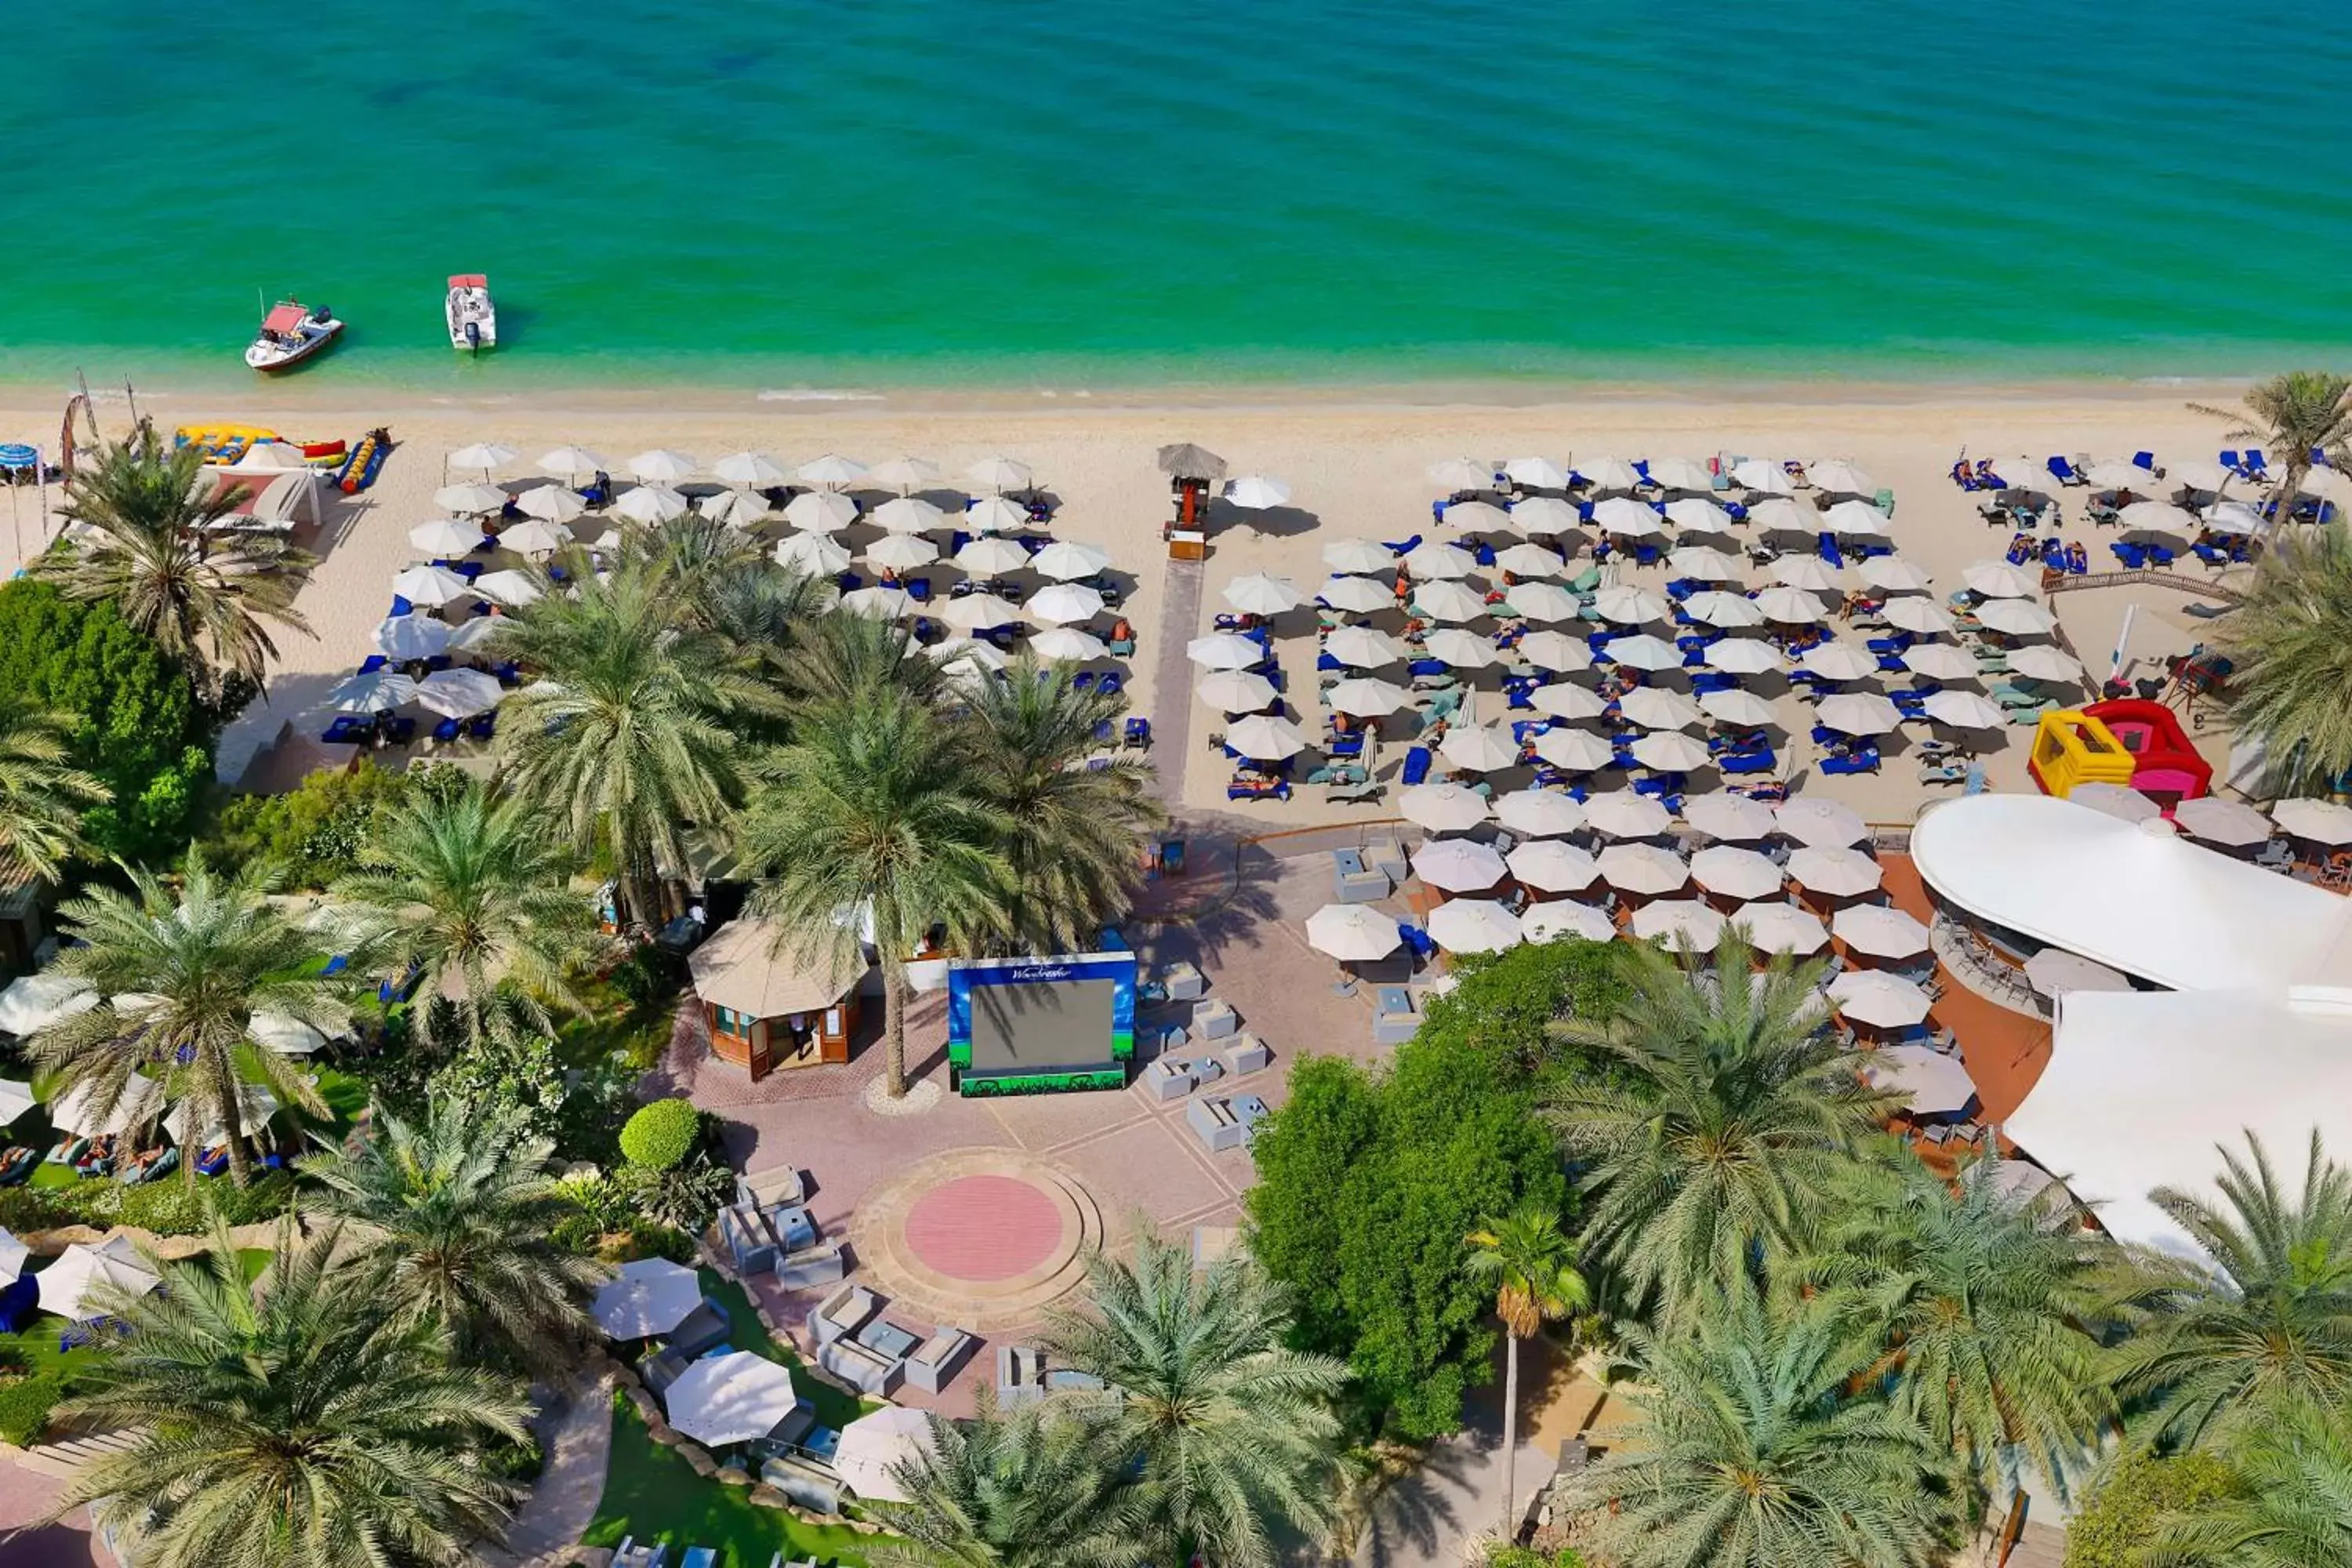 Sports, Bird's-eye View in Hilton Dubai Jumeirah